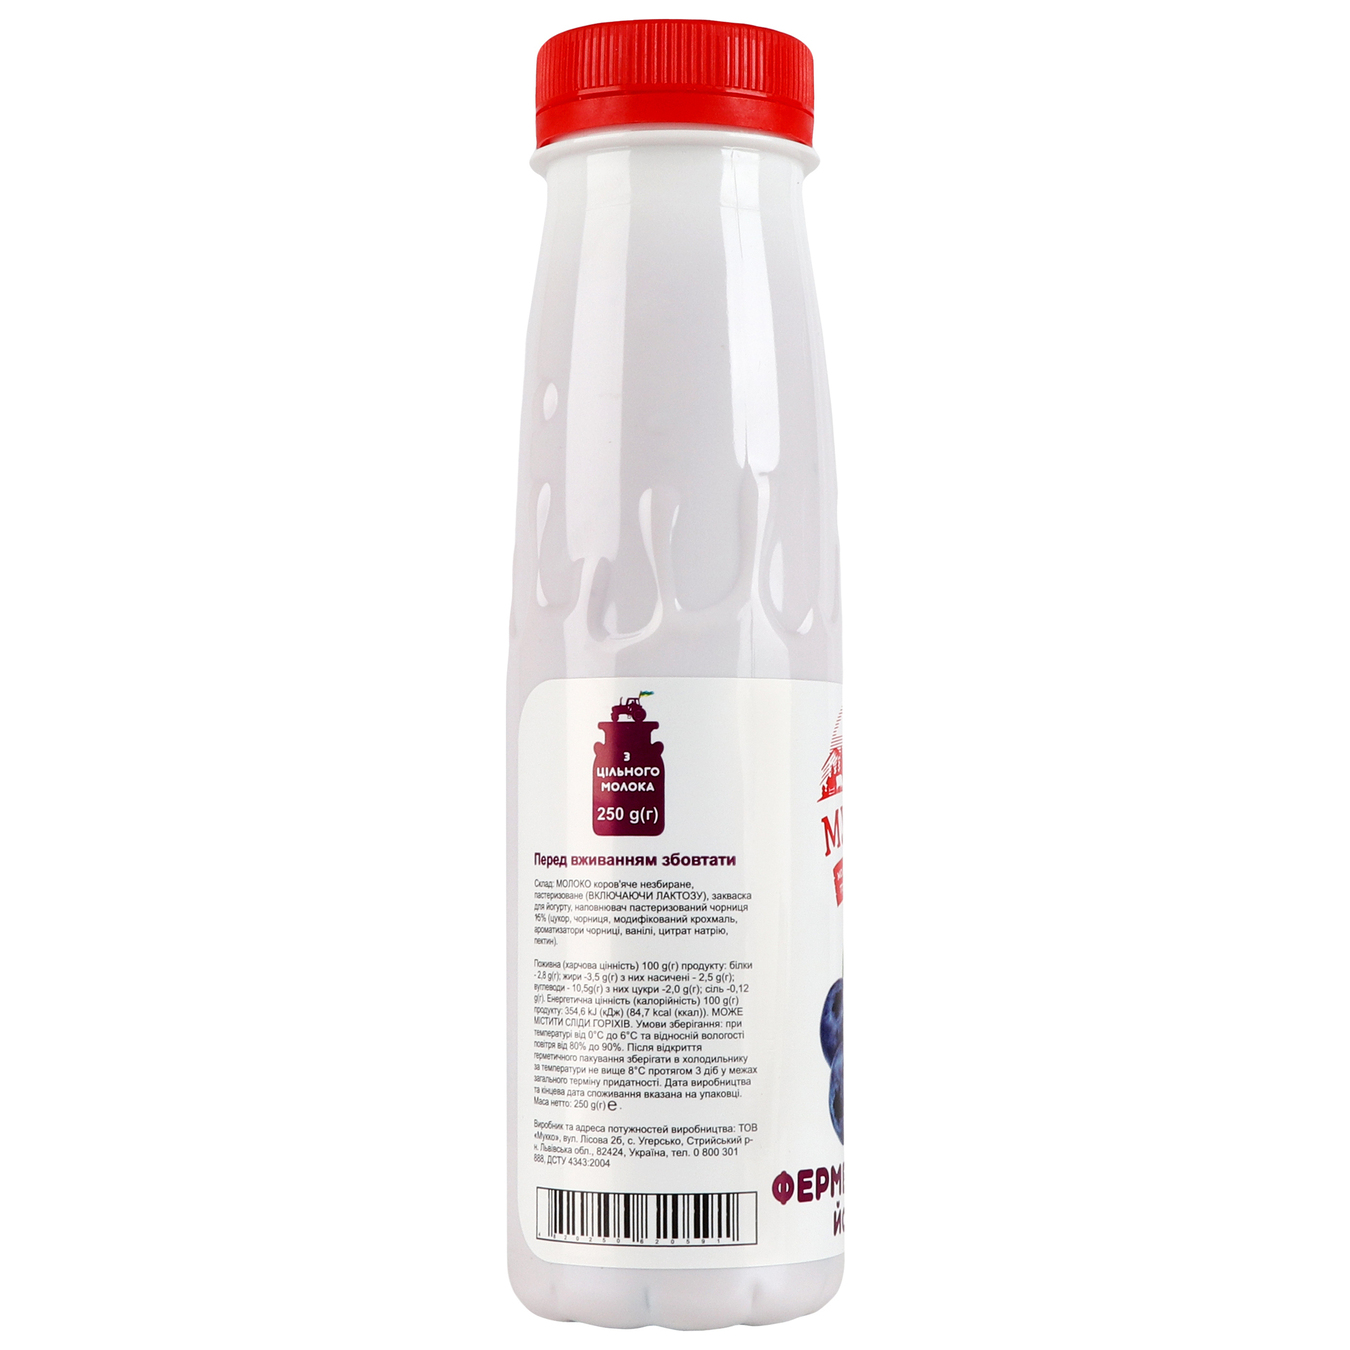 Yogurt Mukko blueberry 3.5% 250g bottle 3